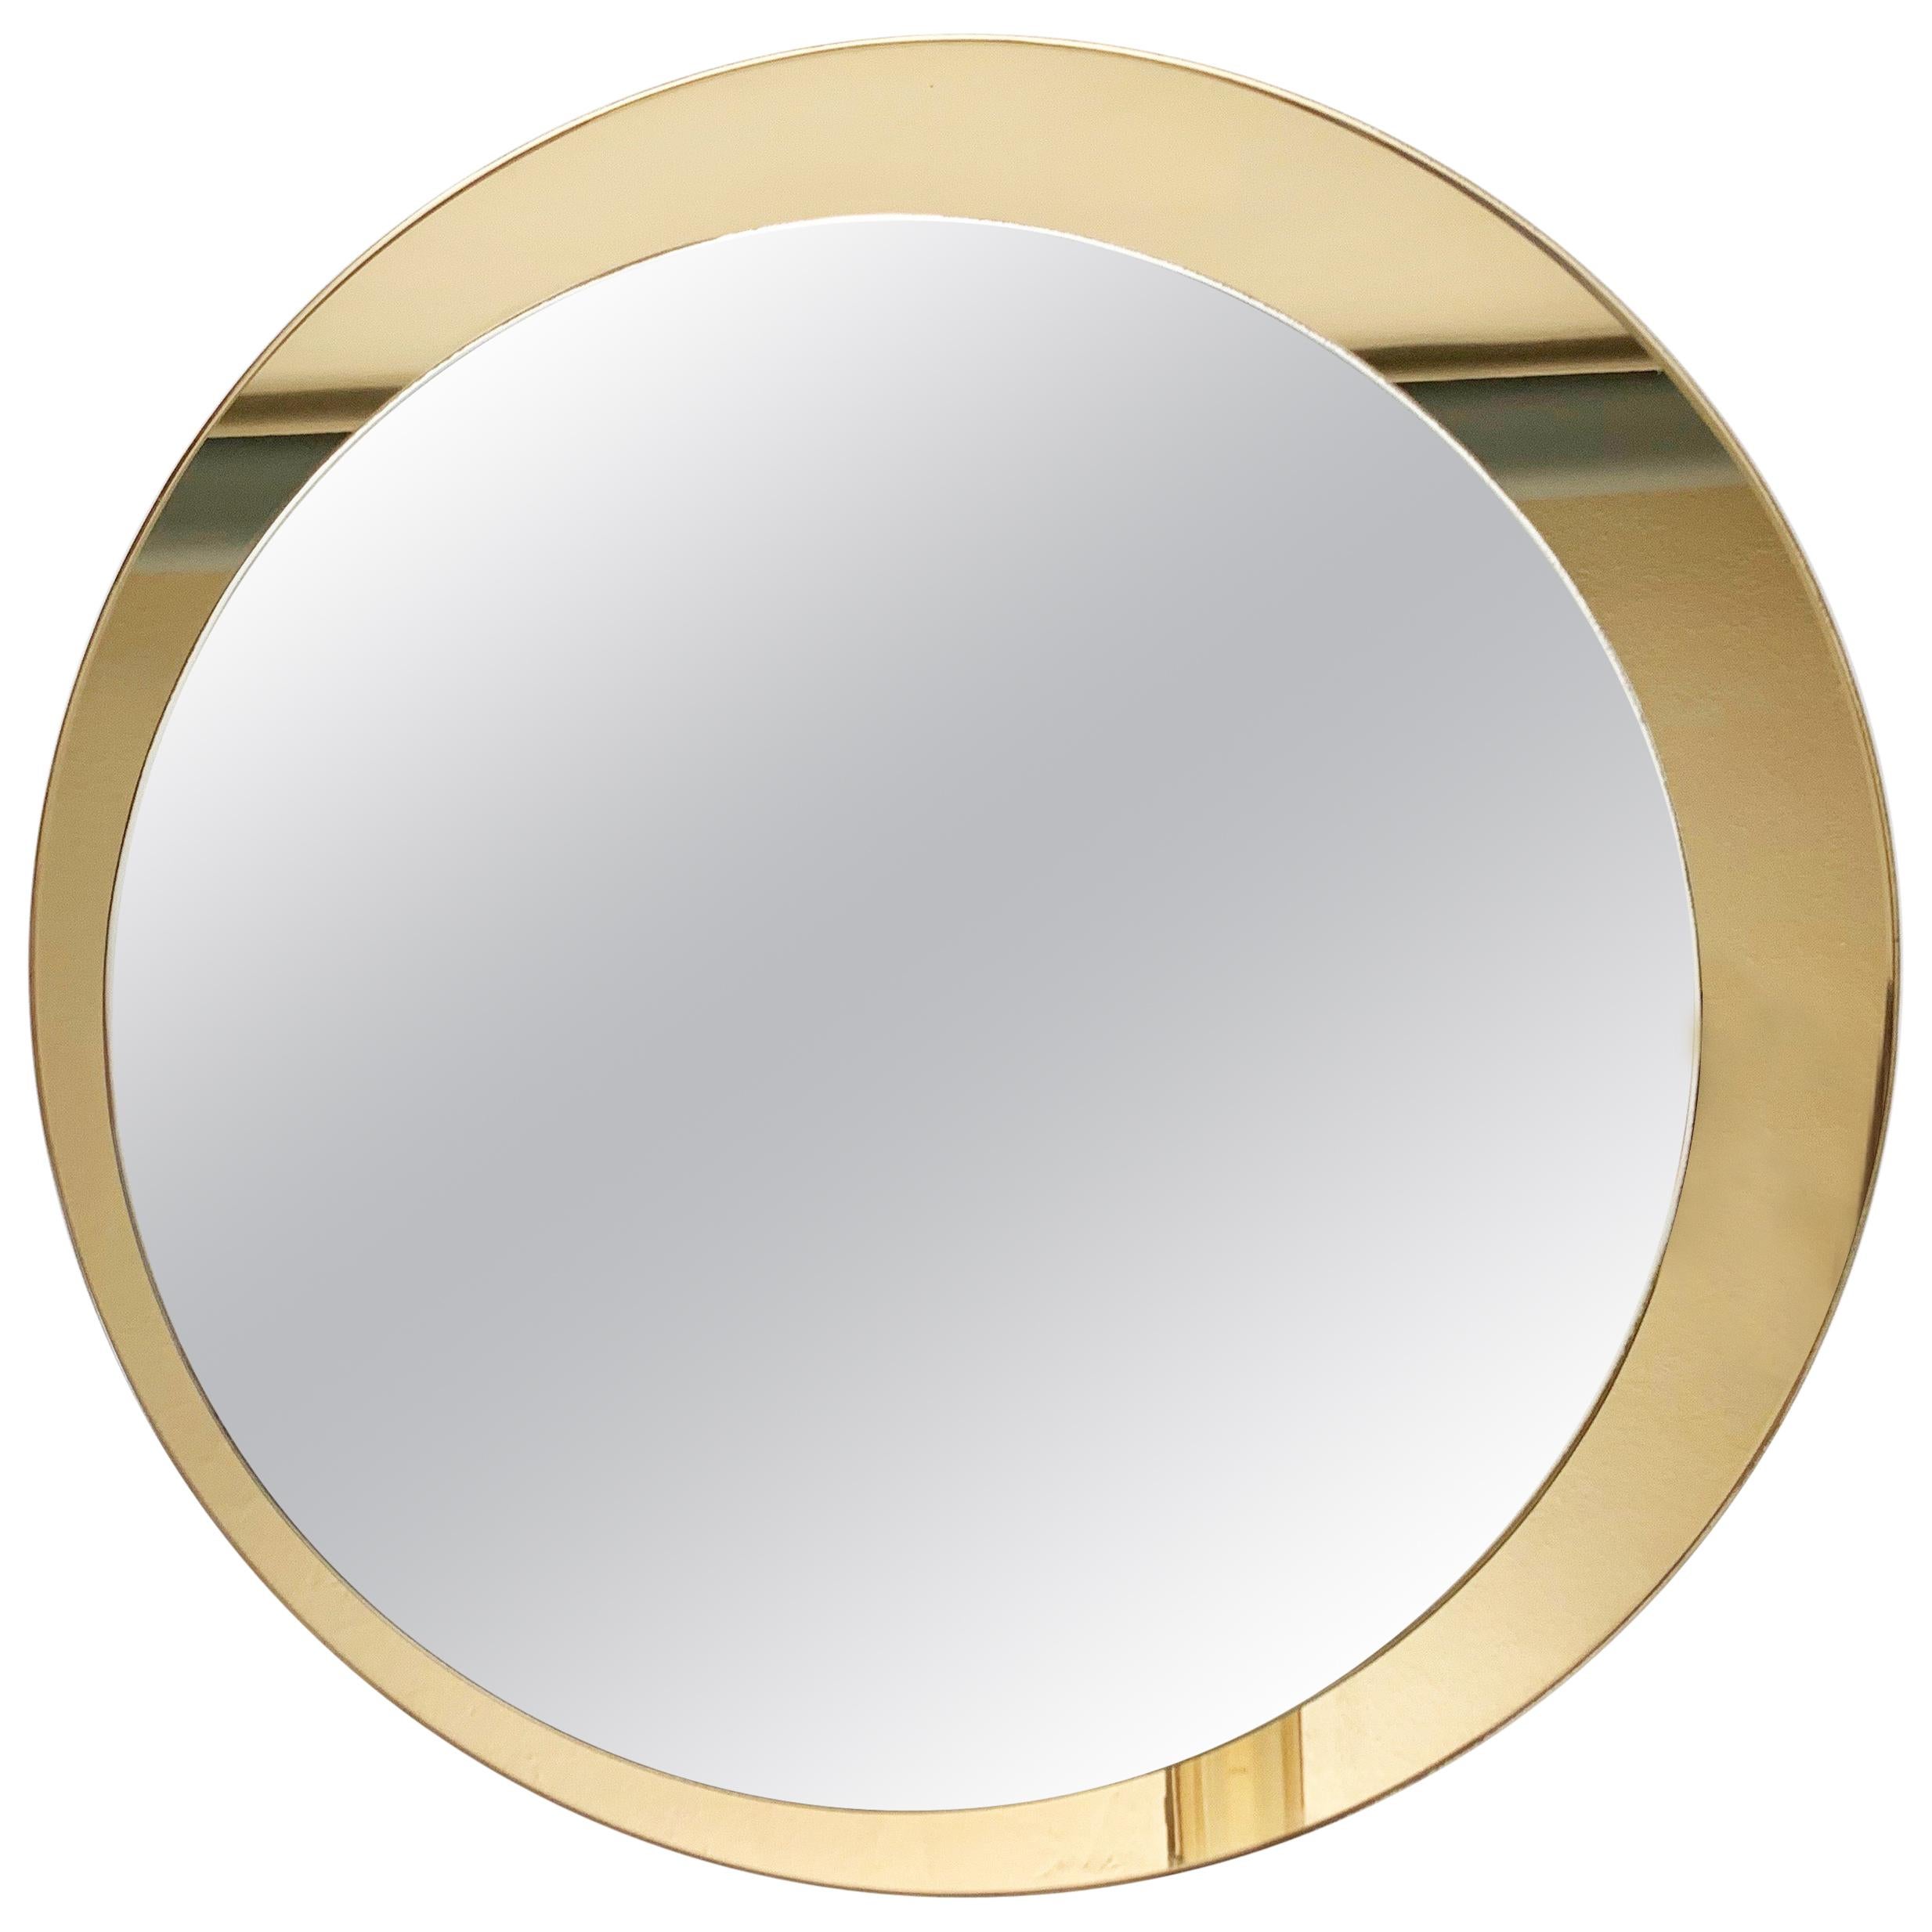 Galimberti Midcentury Italian Round Mirror with Double Brassed Gold Frame, 1975